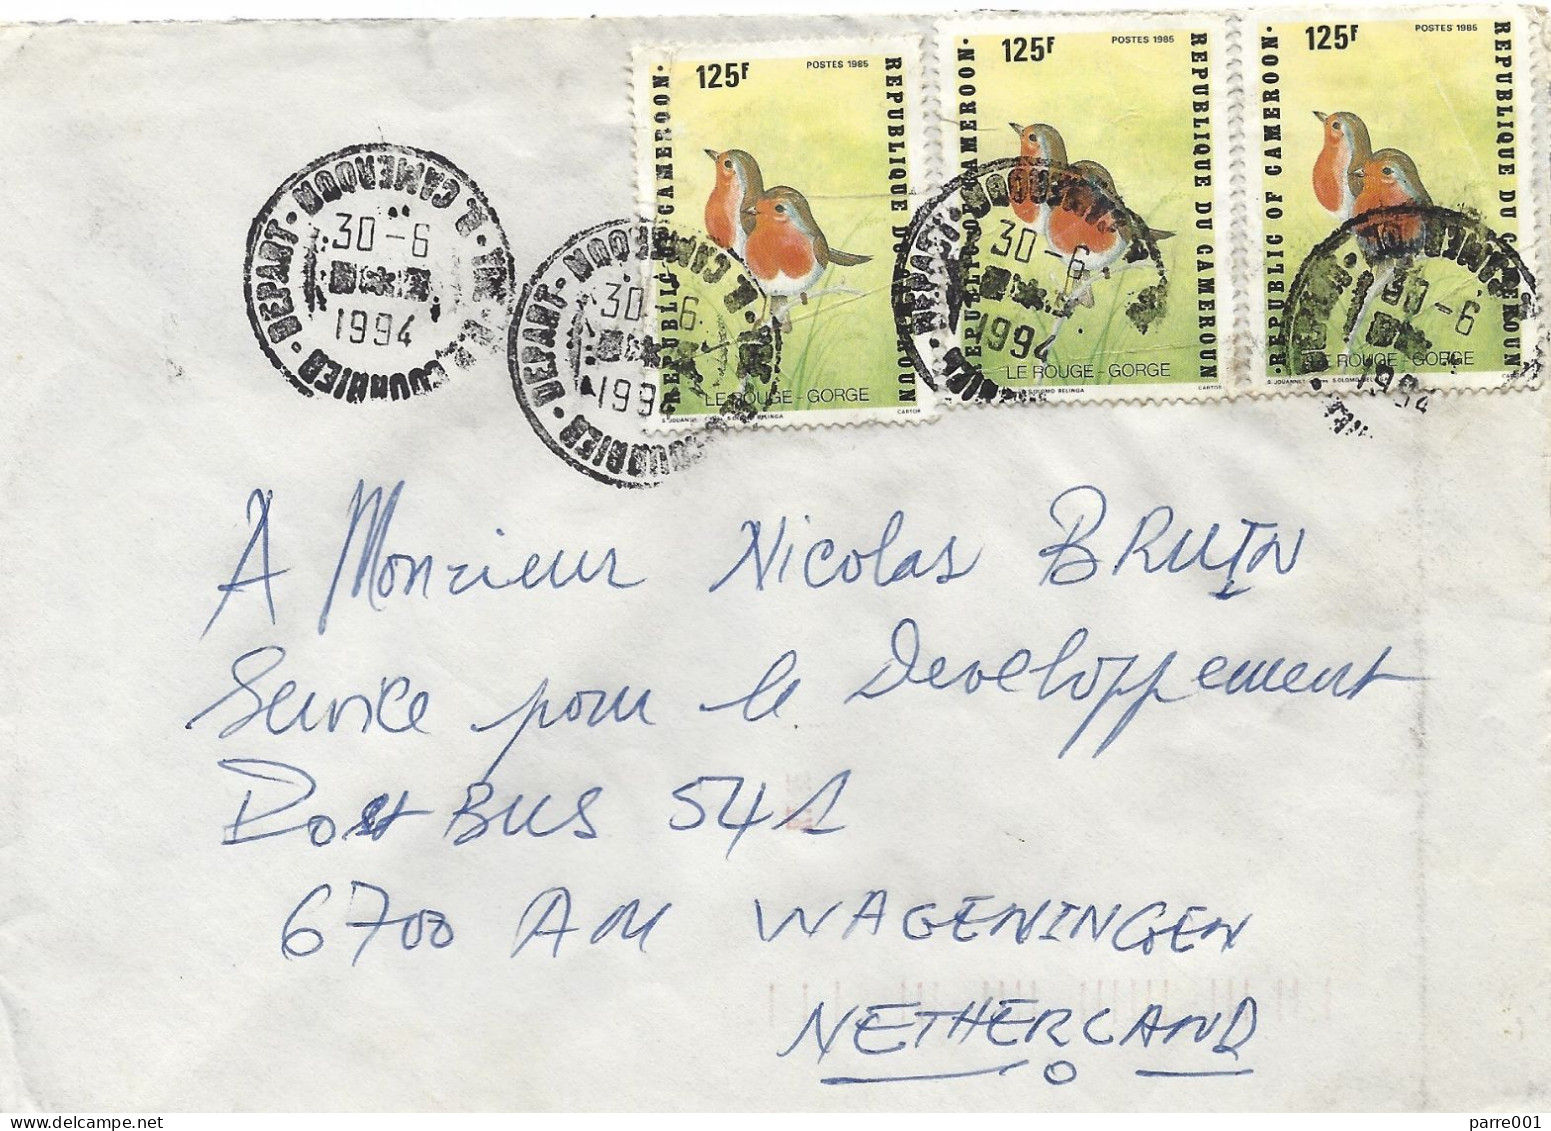 Cameroun Cameroon 1994 Yaounde Robin Erithacus Rubecula Cover - Songbirds & Tree Dwellers